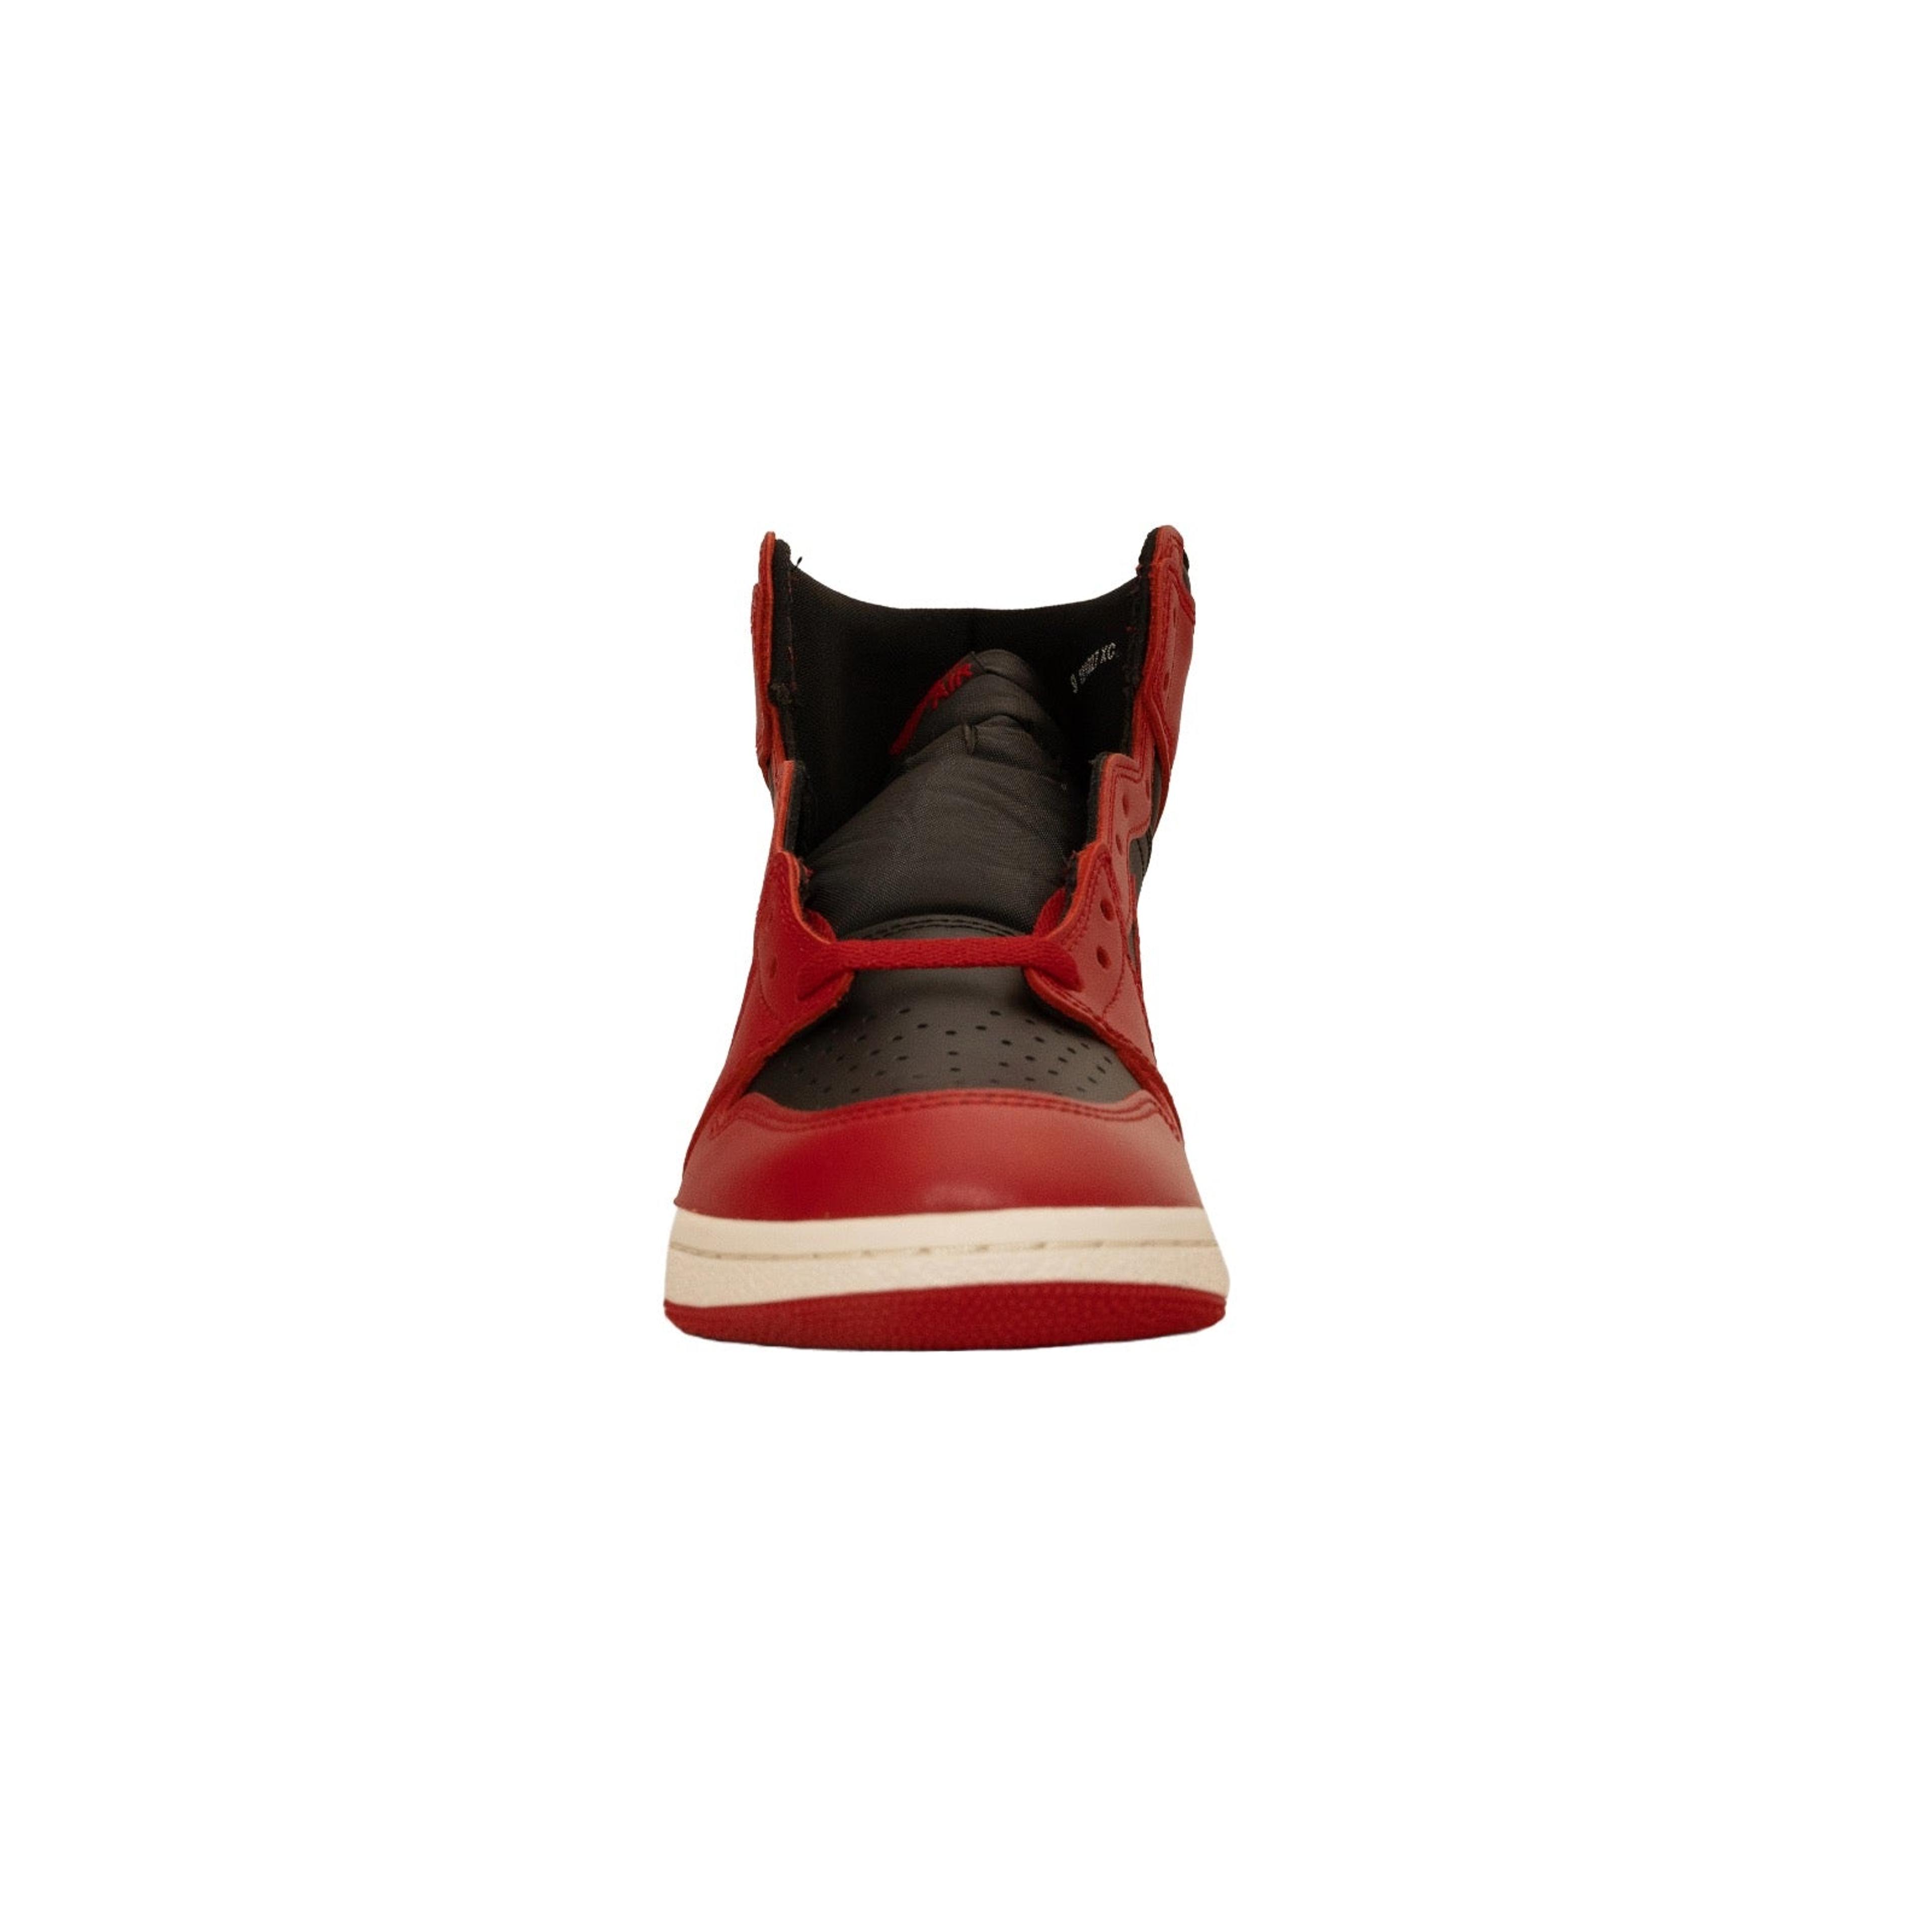 Alternate View 3 of Air Jordan 1 High, '85 Varsity Red